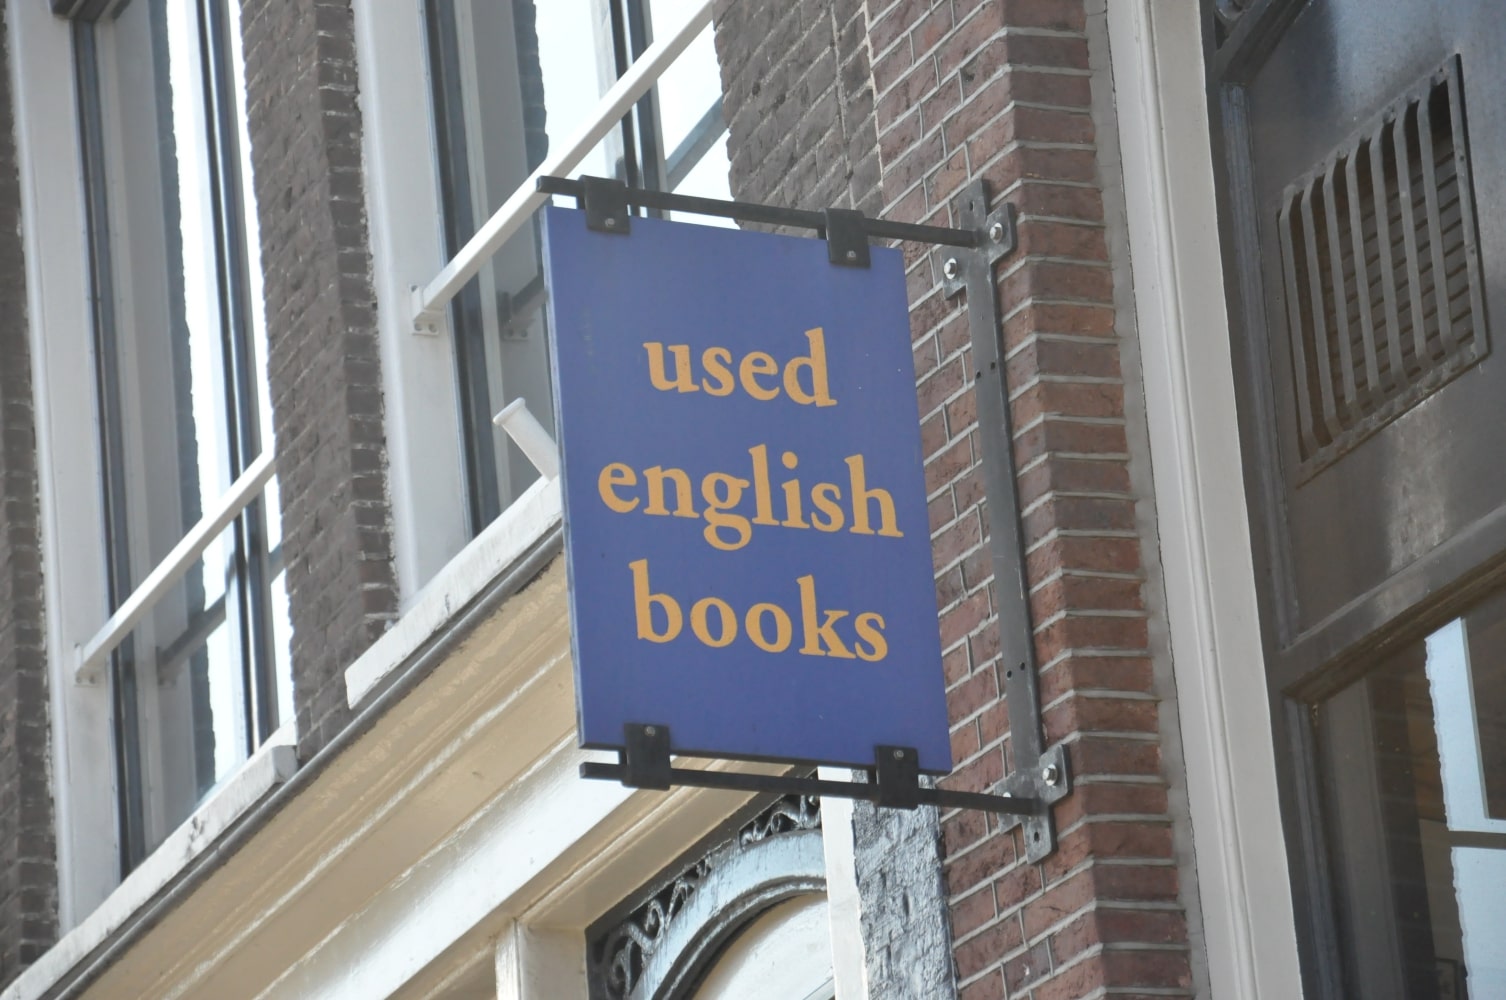 Amsterdam bookstore sign for book sale